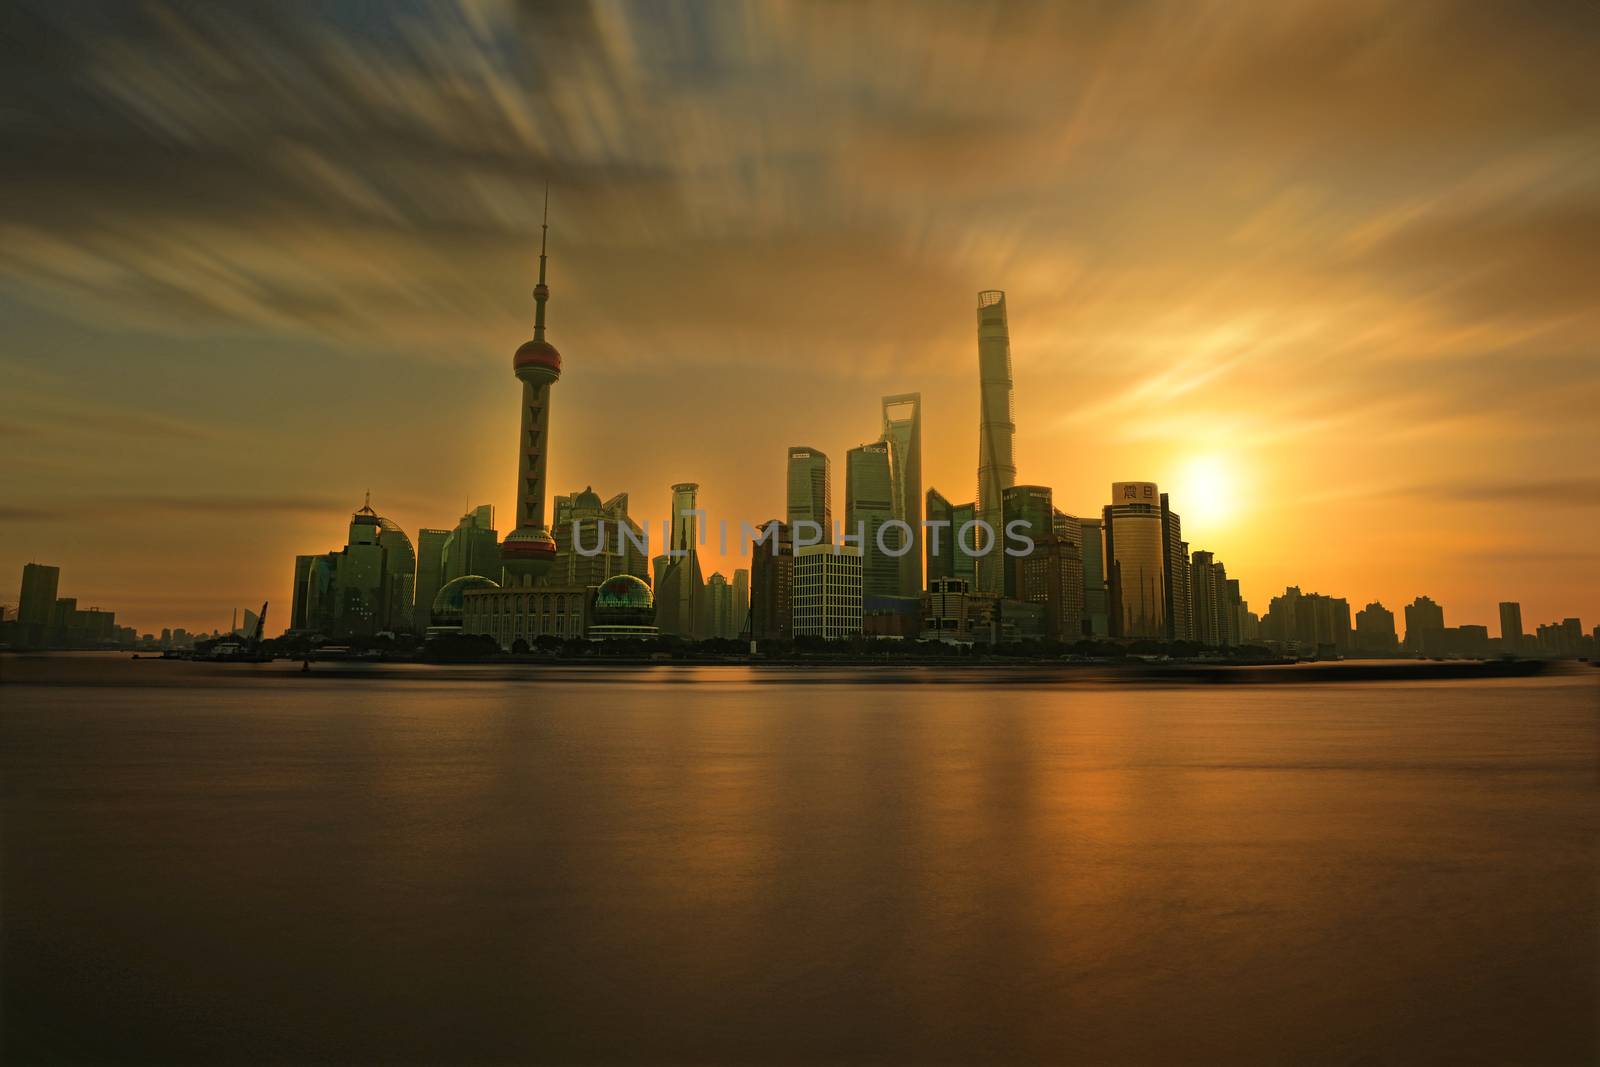 Oriental pearl tower, Shanghai world financial center jinmao tow by tobkatrina